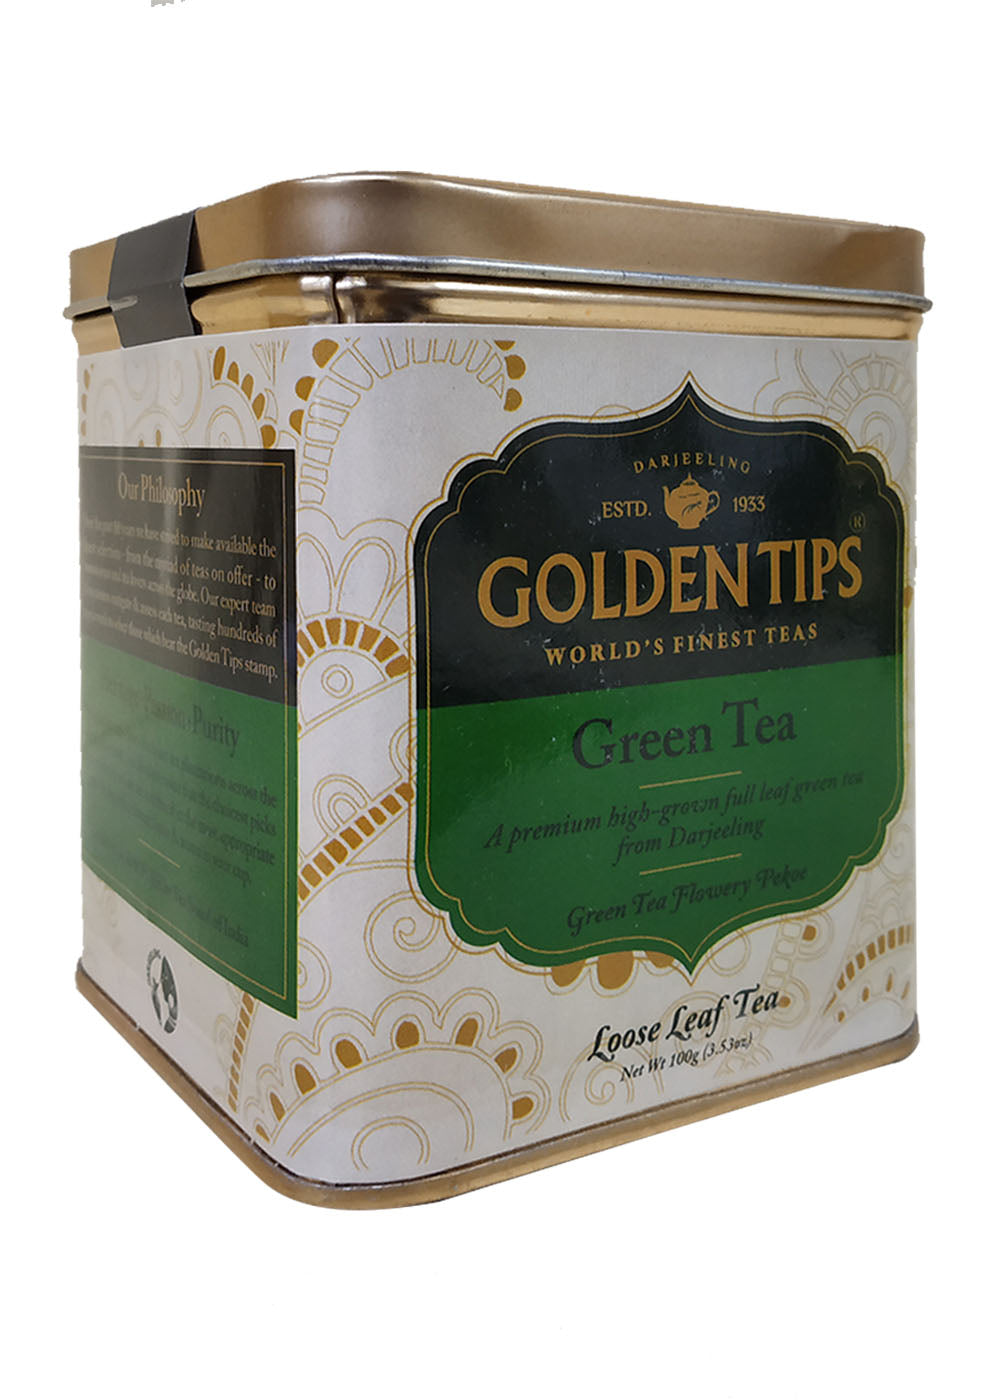 Golden Tips Teas India - Green Tea - Tin Can | BeKarmic | Green Tea | Beverage, Drink, Golden Tips Teas India, Green Tea, Less than ₹500, Tea, Tea Leaves